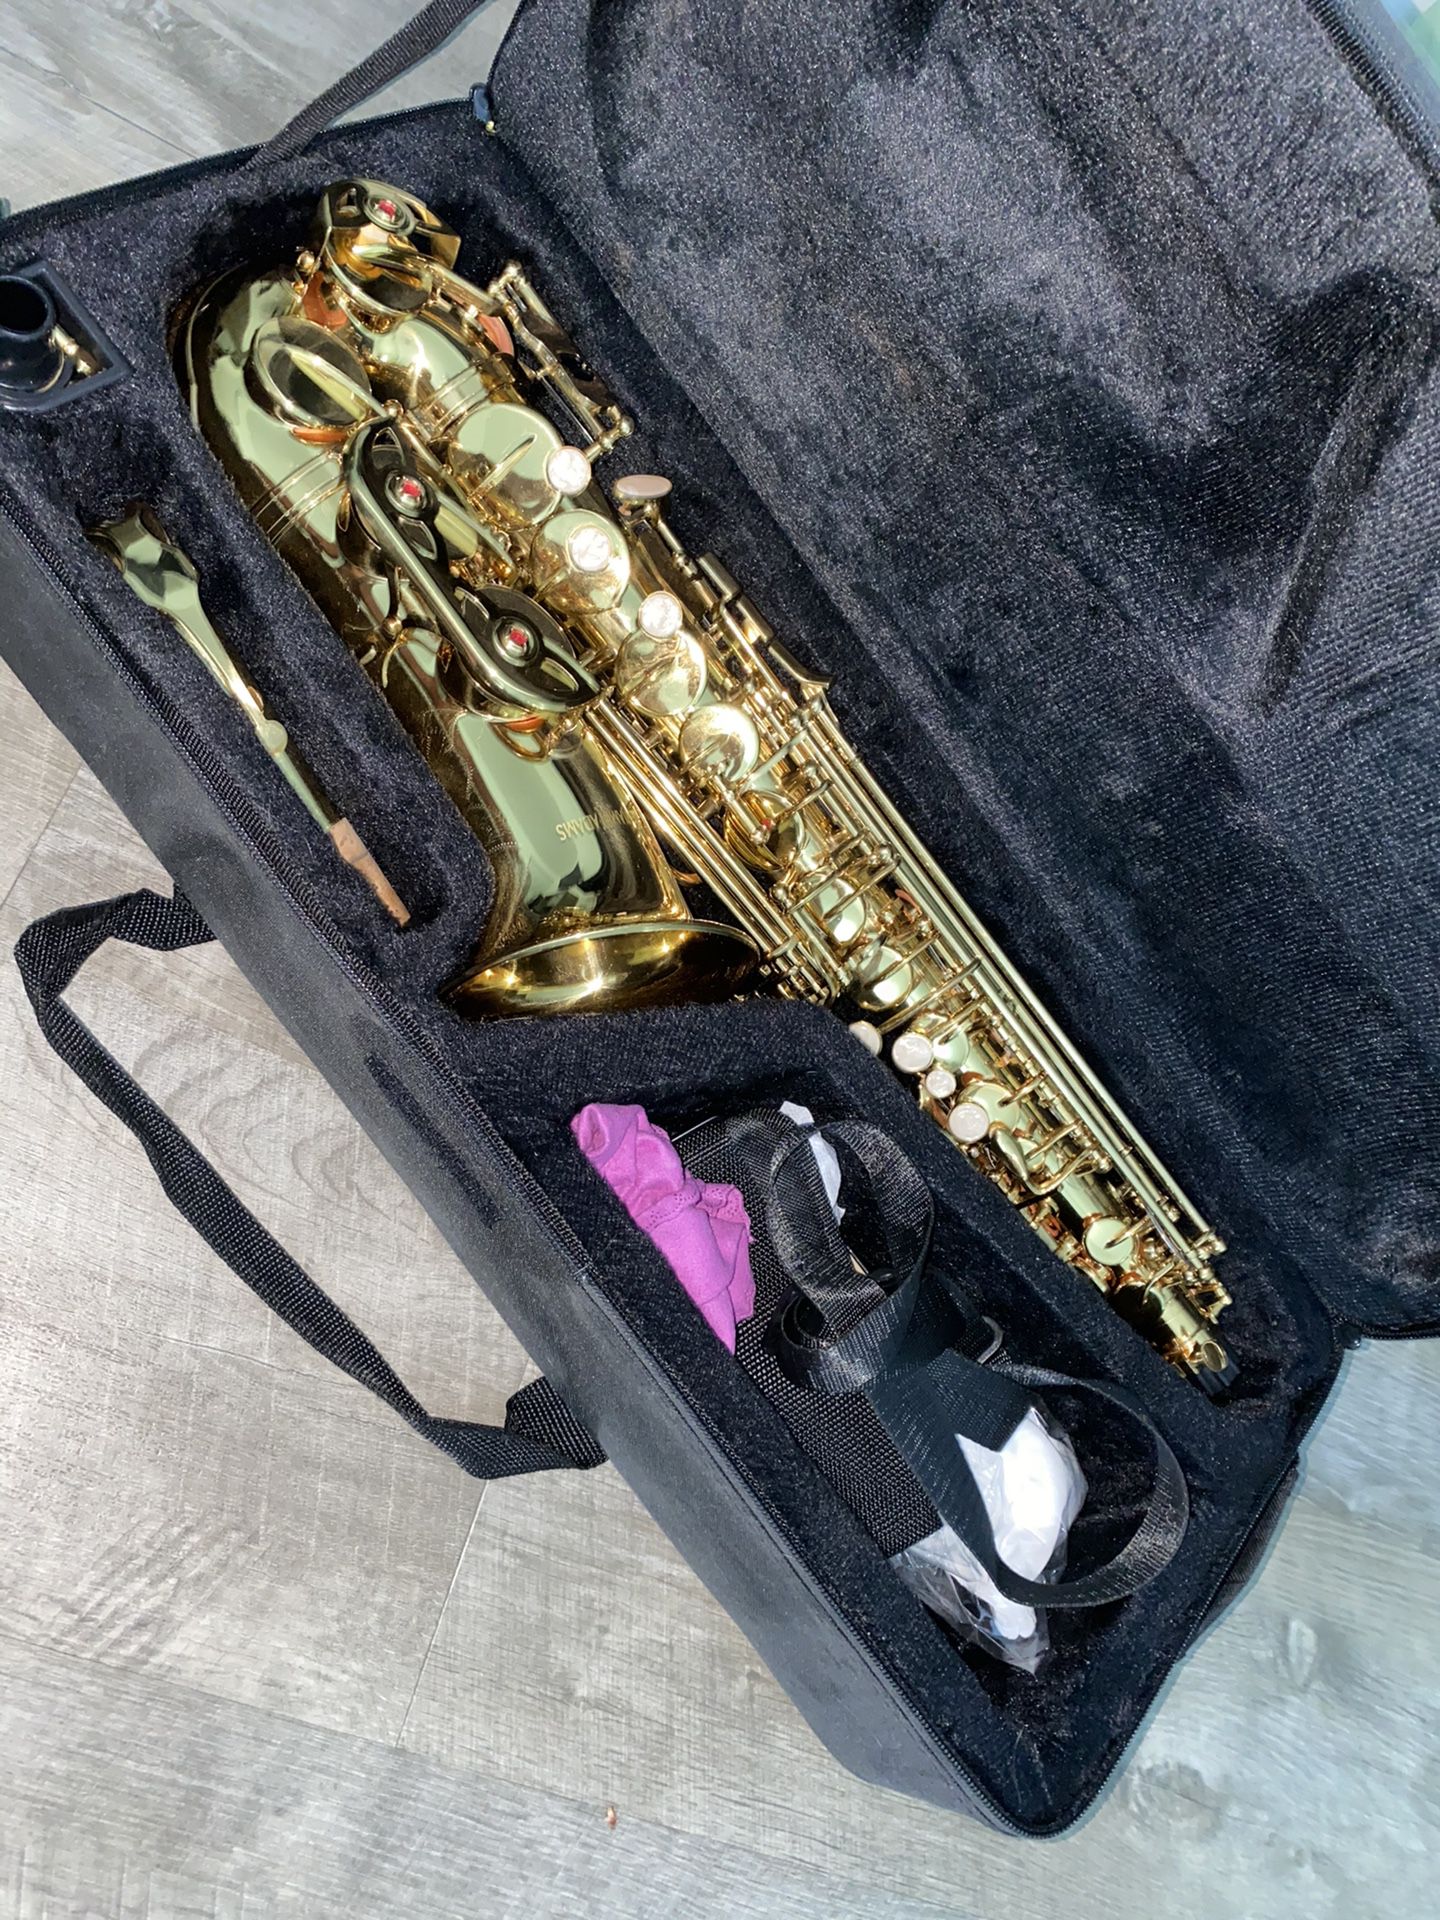 New Alto Saxophone